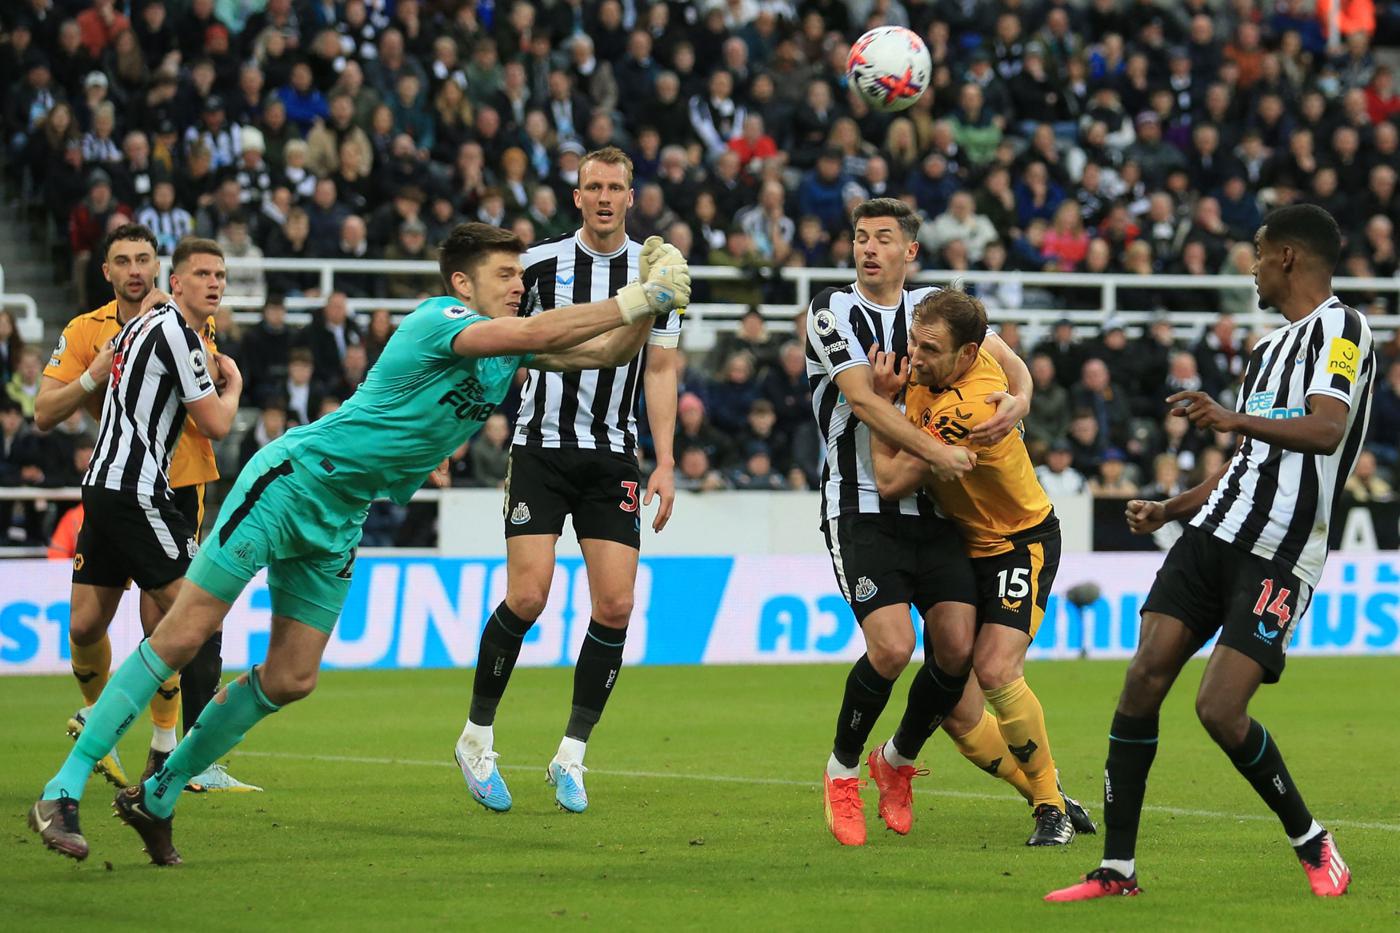 Newcastle - Wolverhampton - 2:1. English Championship, Matchday 27. Match review, statistics